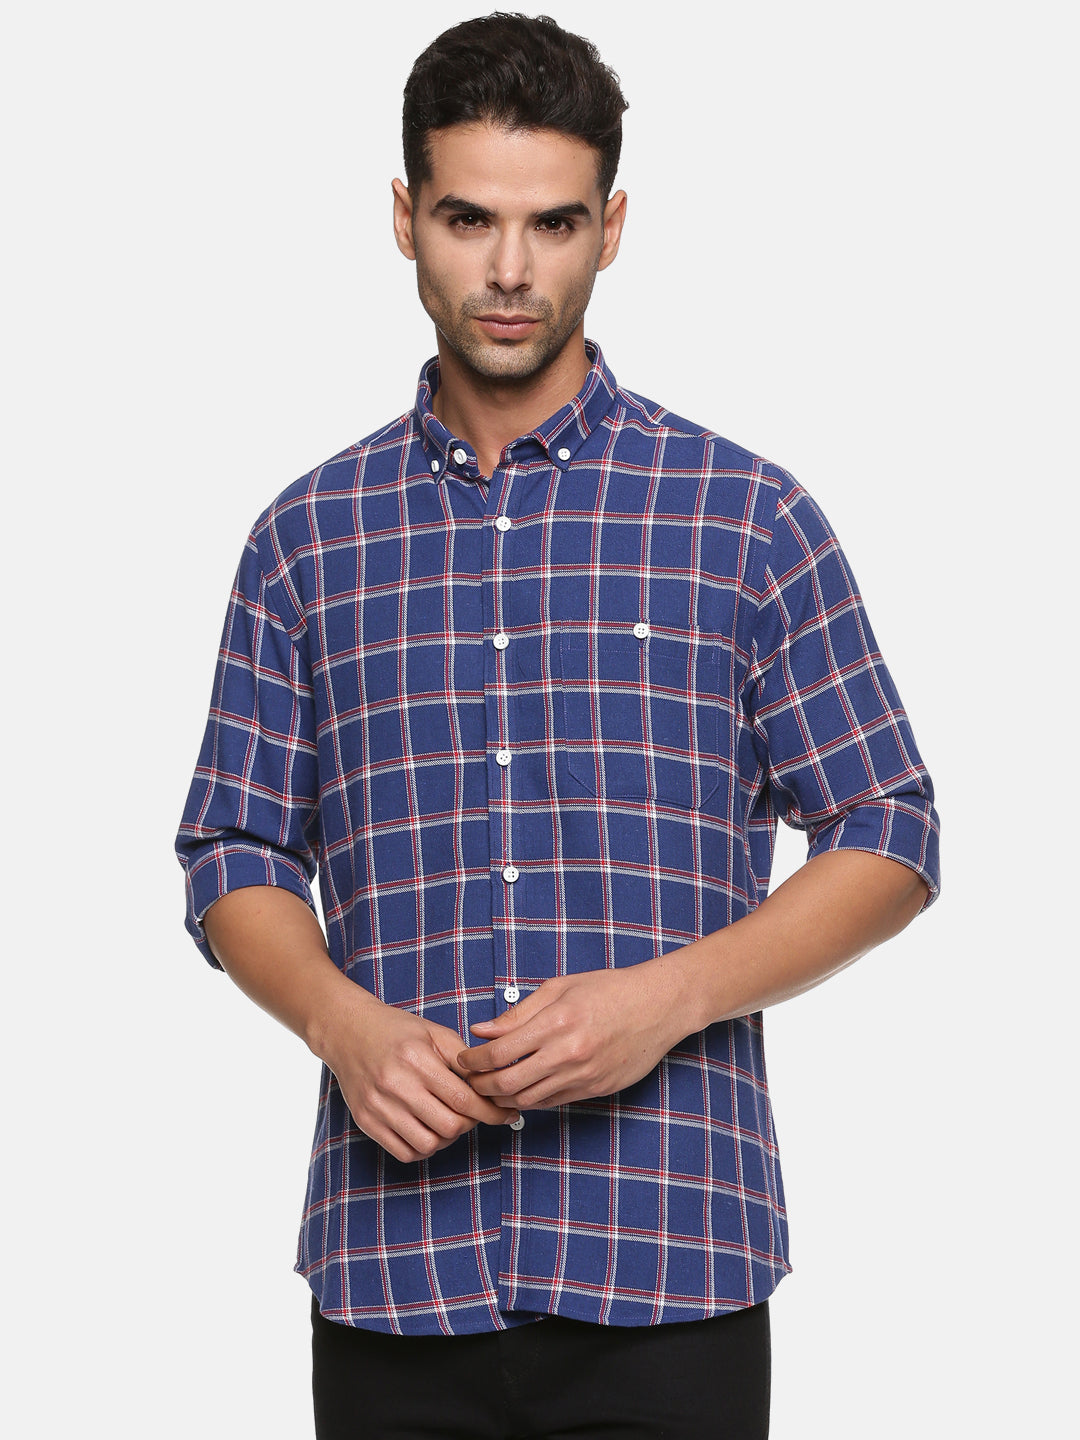 Men Blue Checkered Slim Fit Casual Shirt, Men's Full Sleeve Cotton Shirt